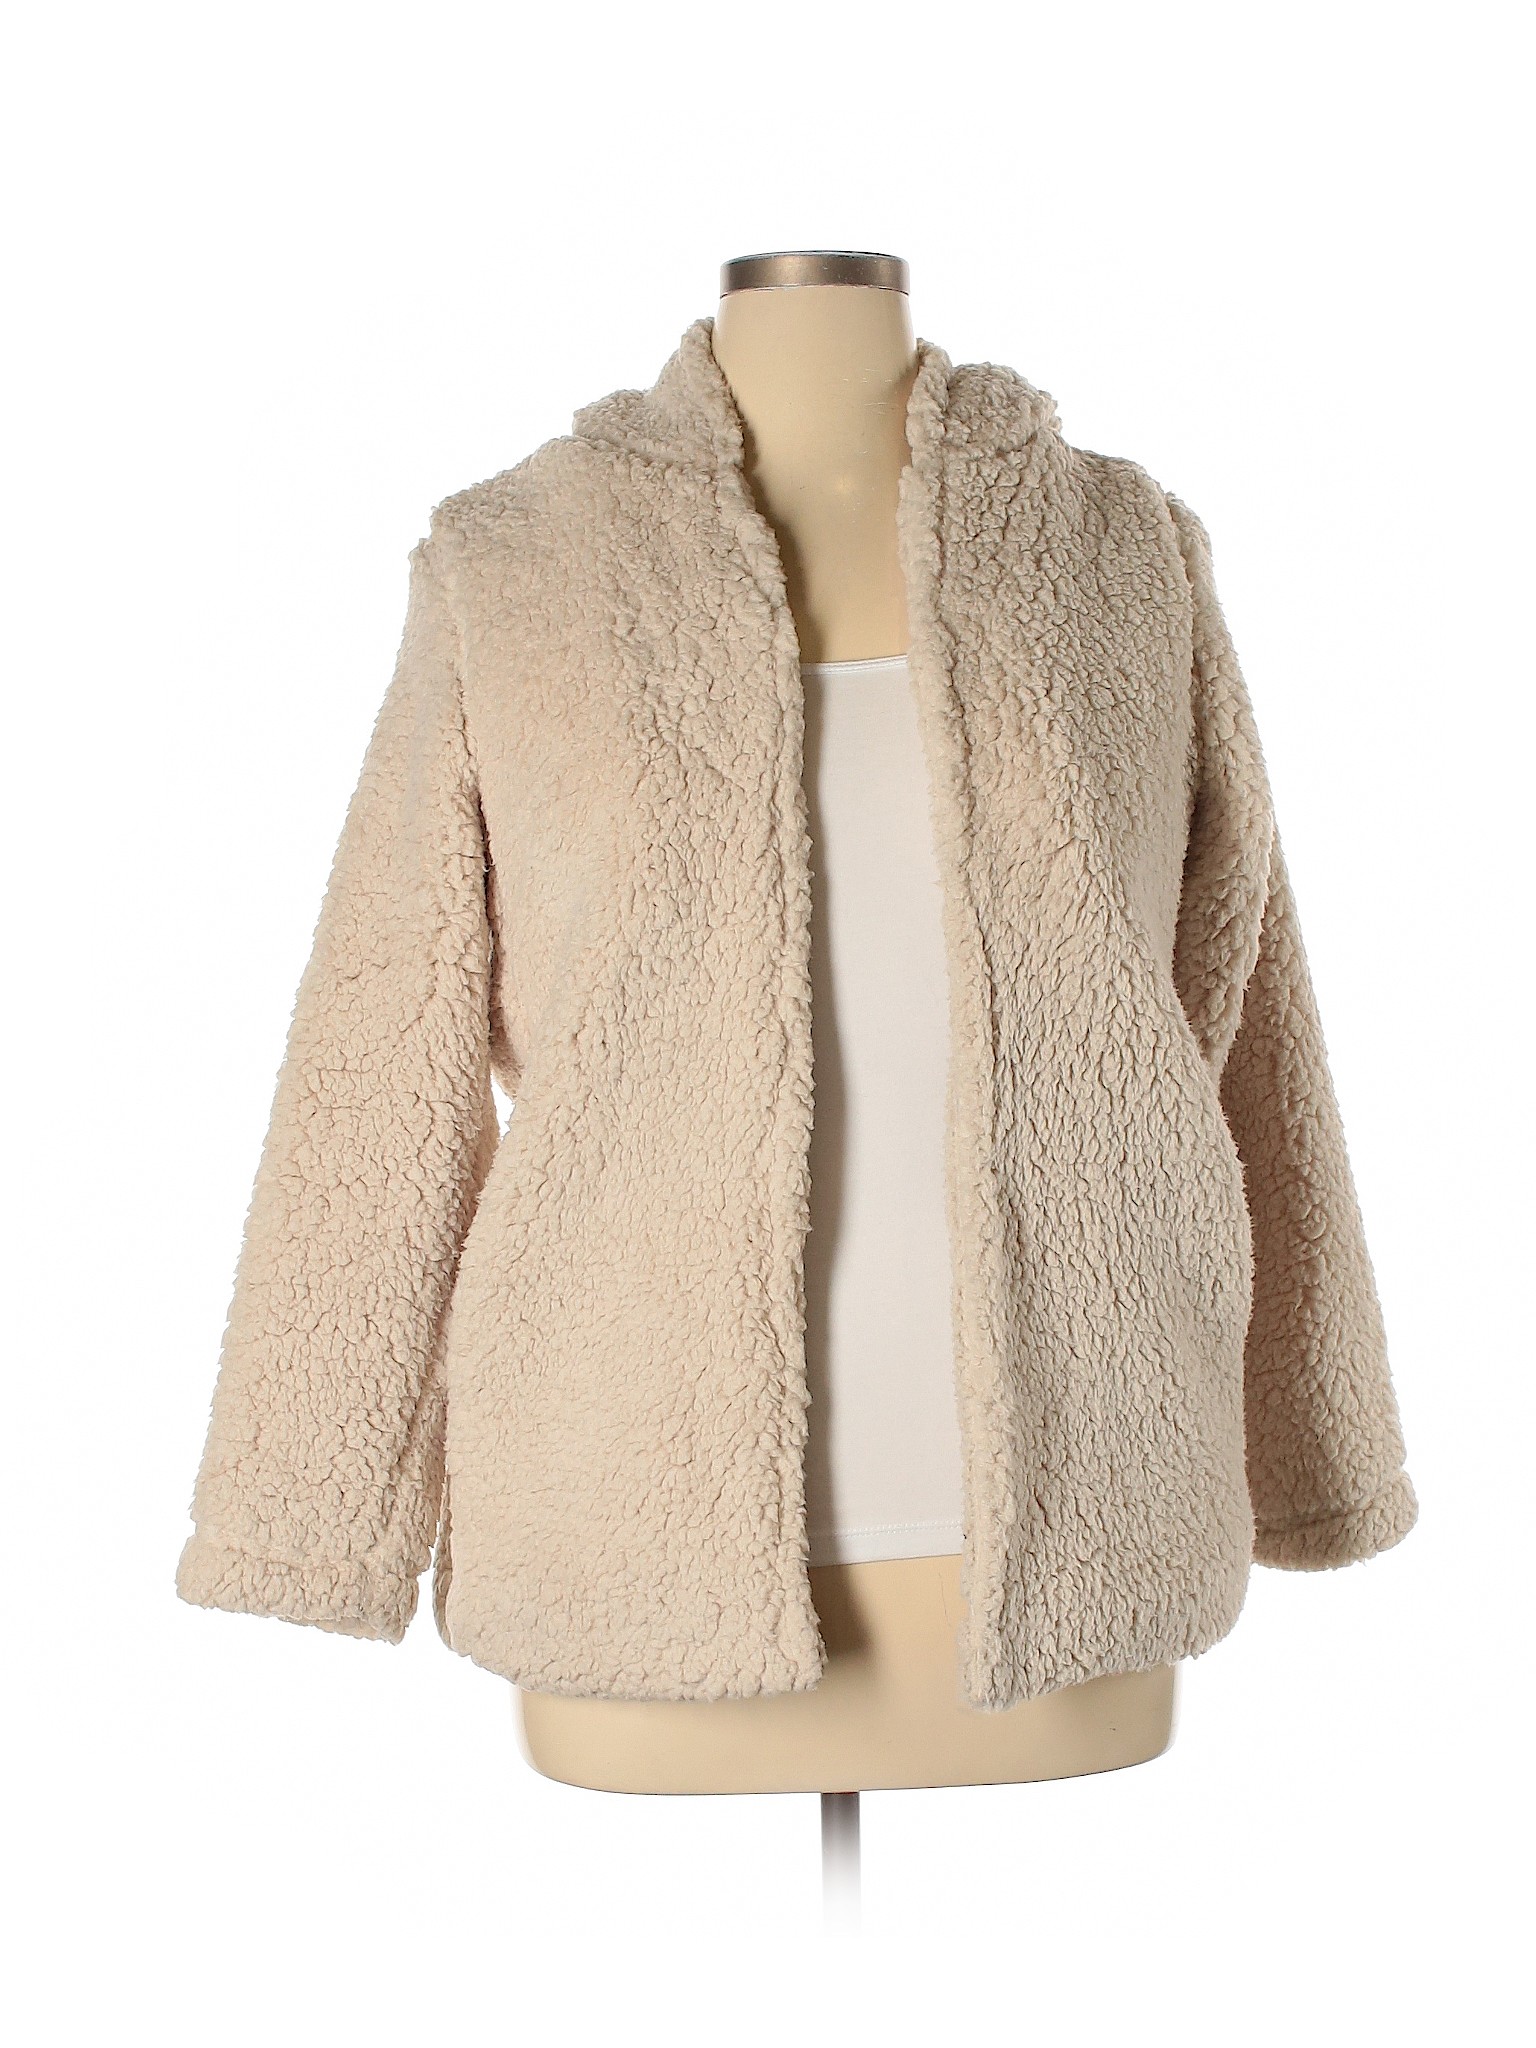 Knapp Studio Women Brown Jacket XL | eBay